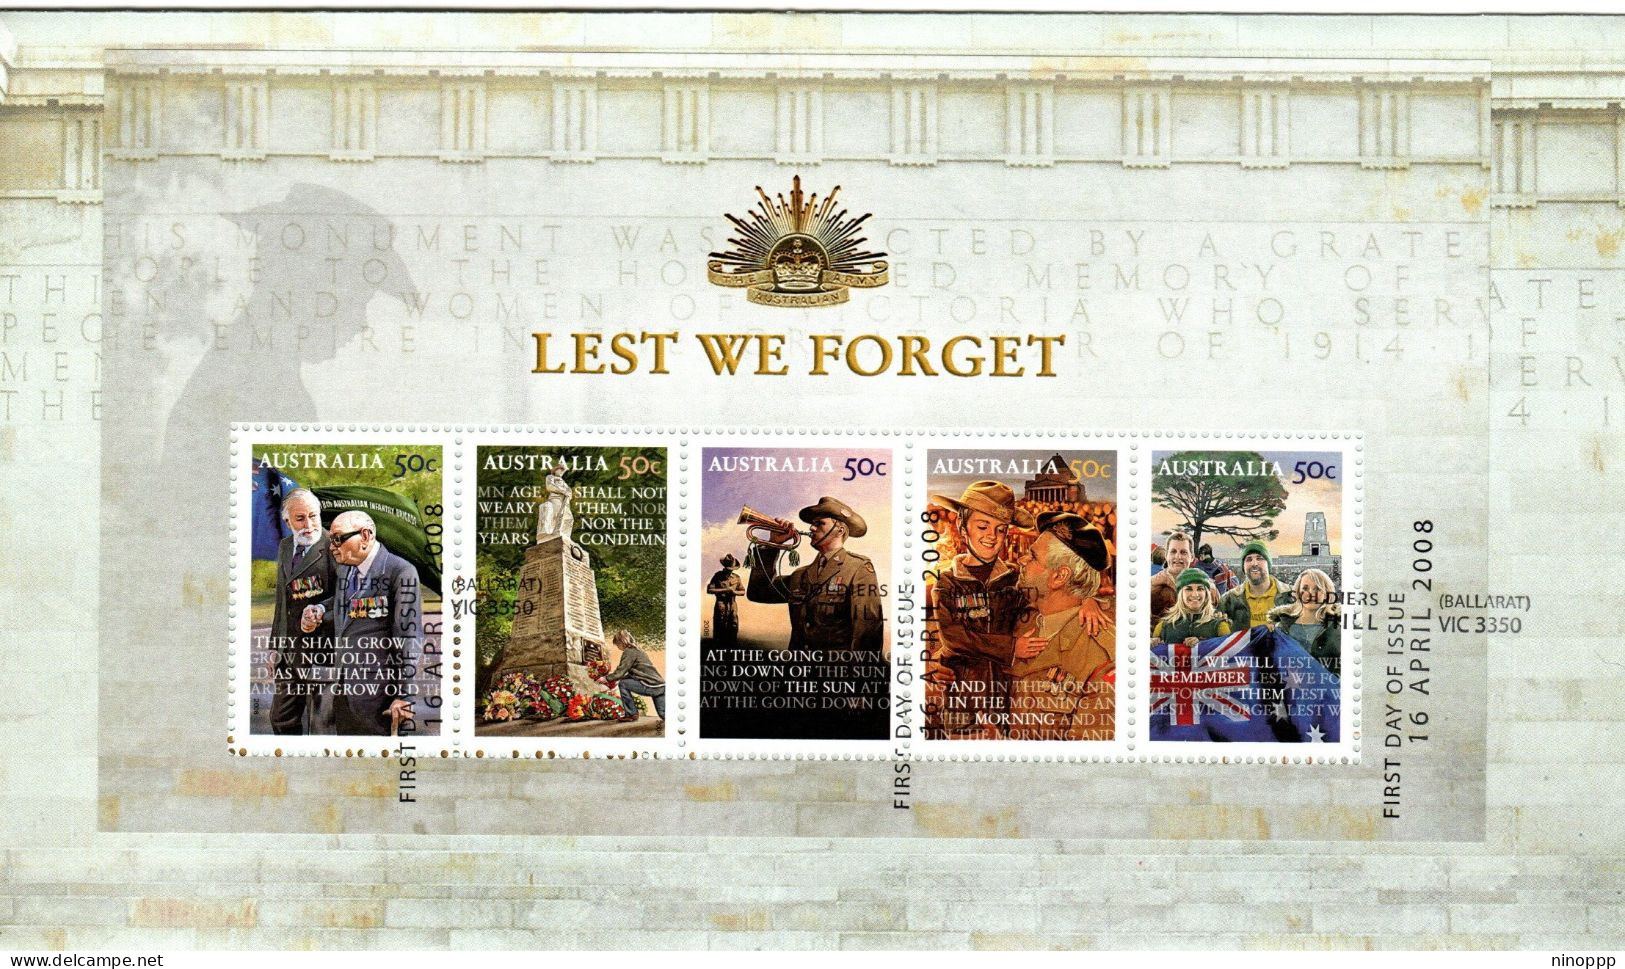 Australia 2008 Lest We Forget,Mini Sheet, Soldiers Hill Postmark,FDI - Bolli E Annullamenti